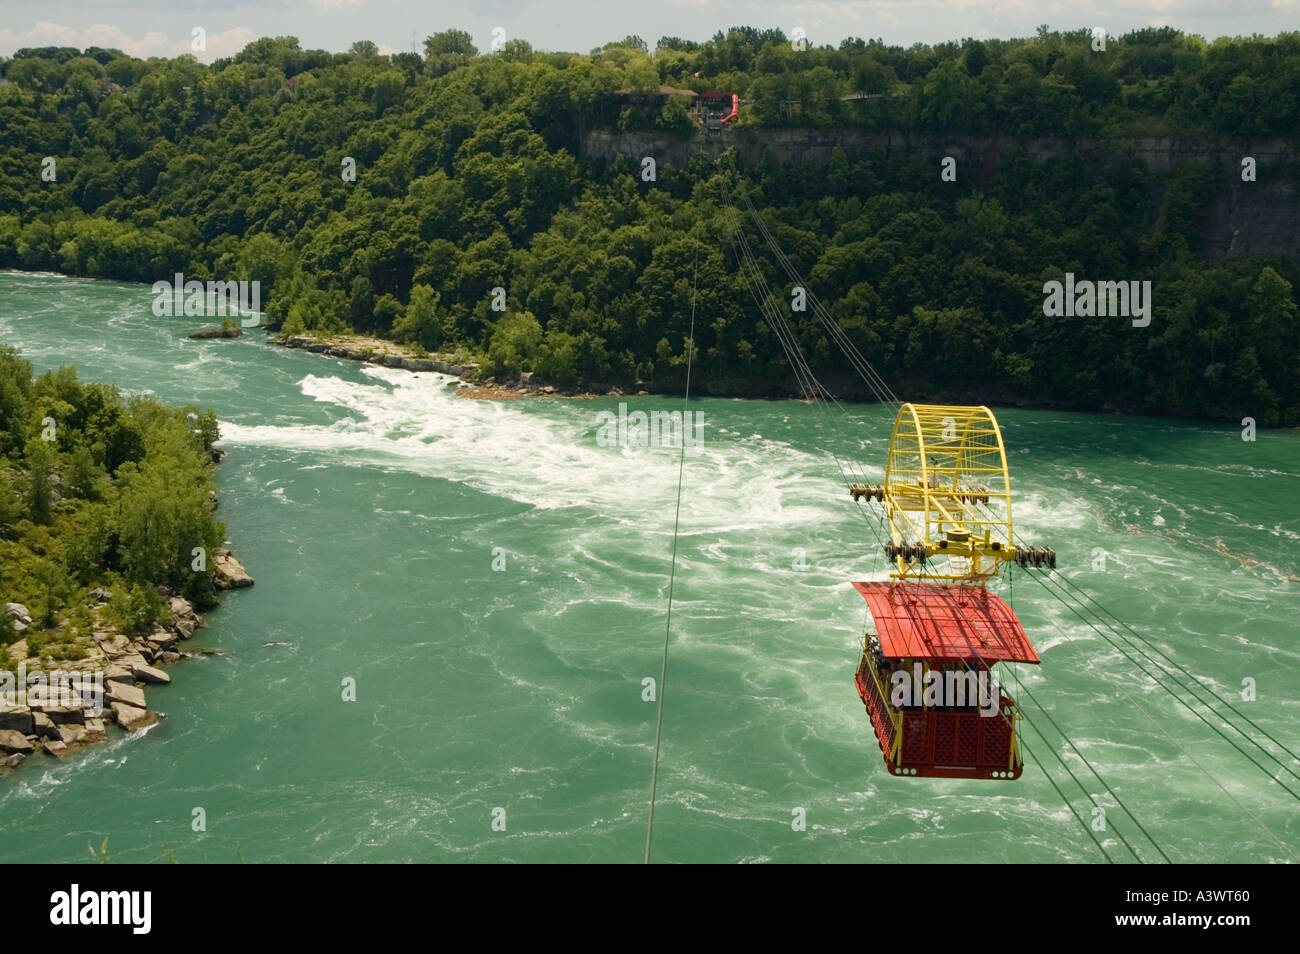 Canada Ontario Niagara Falls Spanish Aerocar over The Whirlpool on the Niagara River Stock Photo